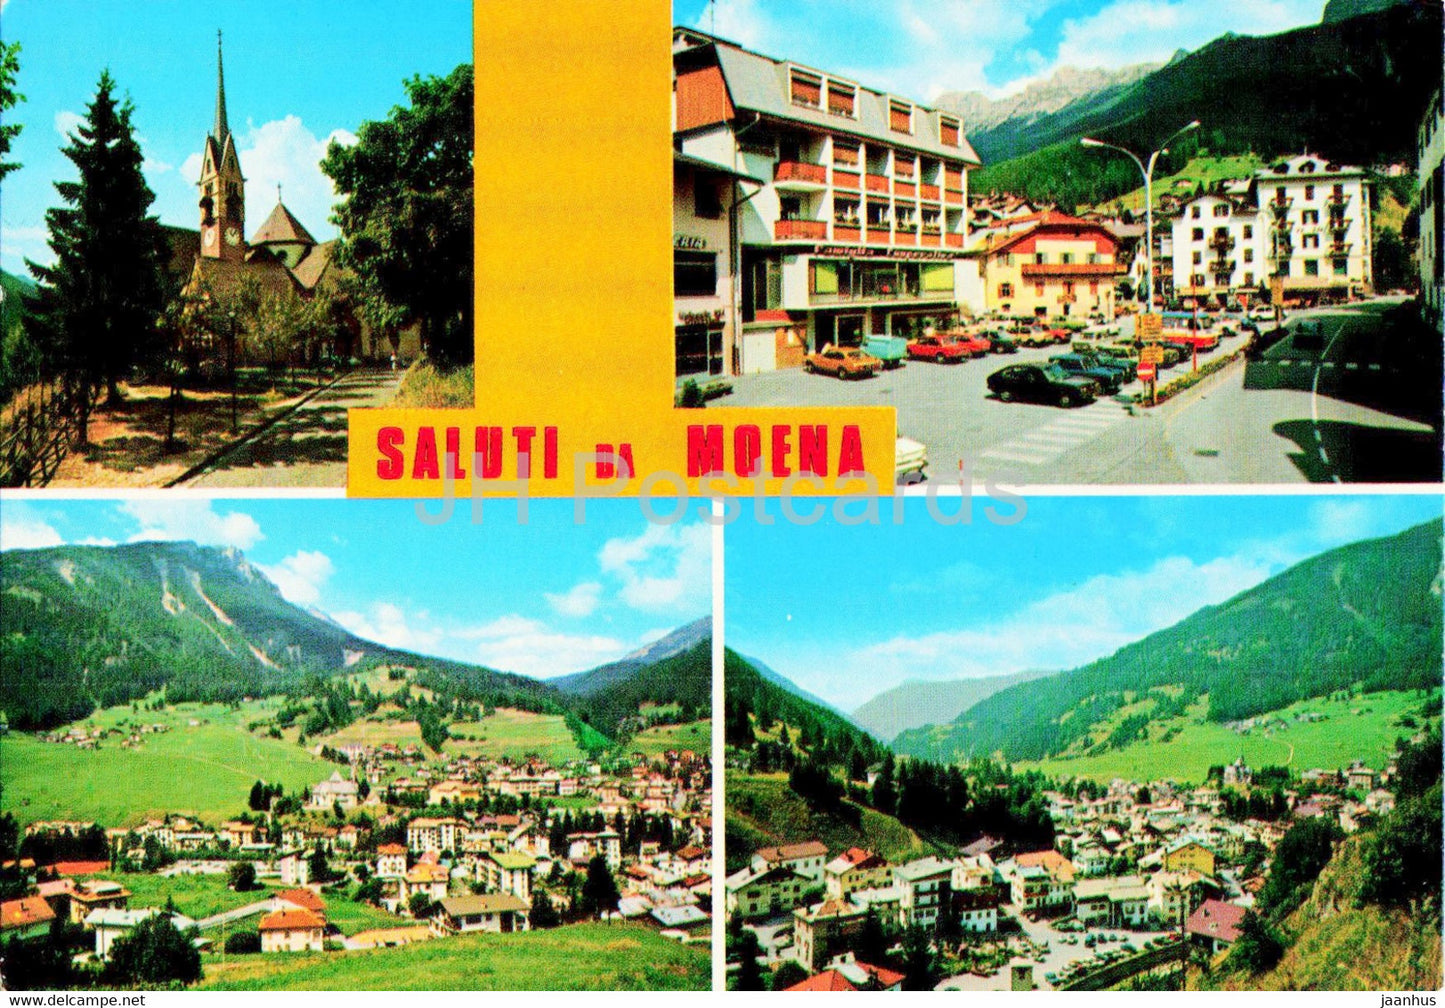 Saluti da Moena - Val di Fassa - church - town views - 1979 - Italy - used - JH Postcards